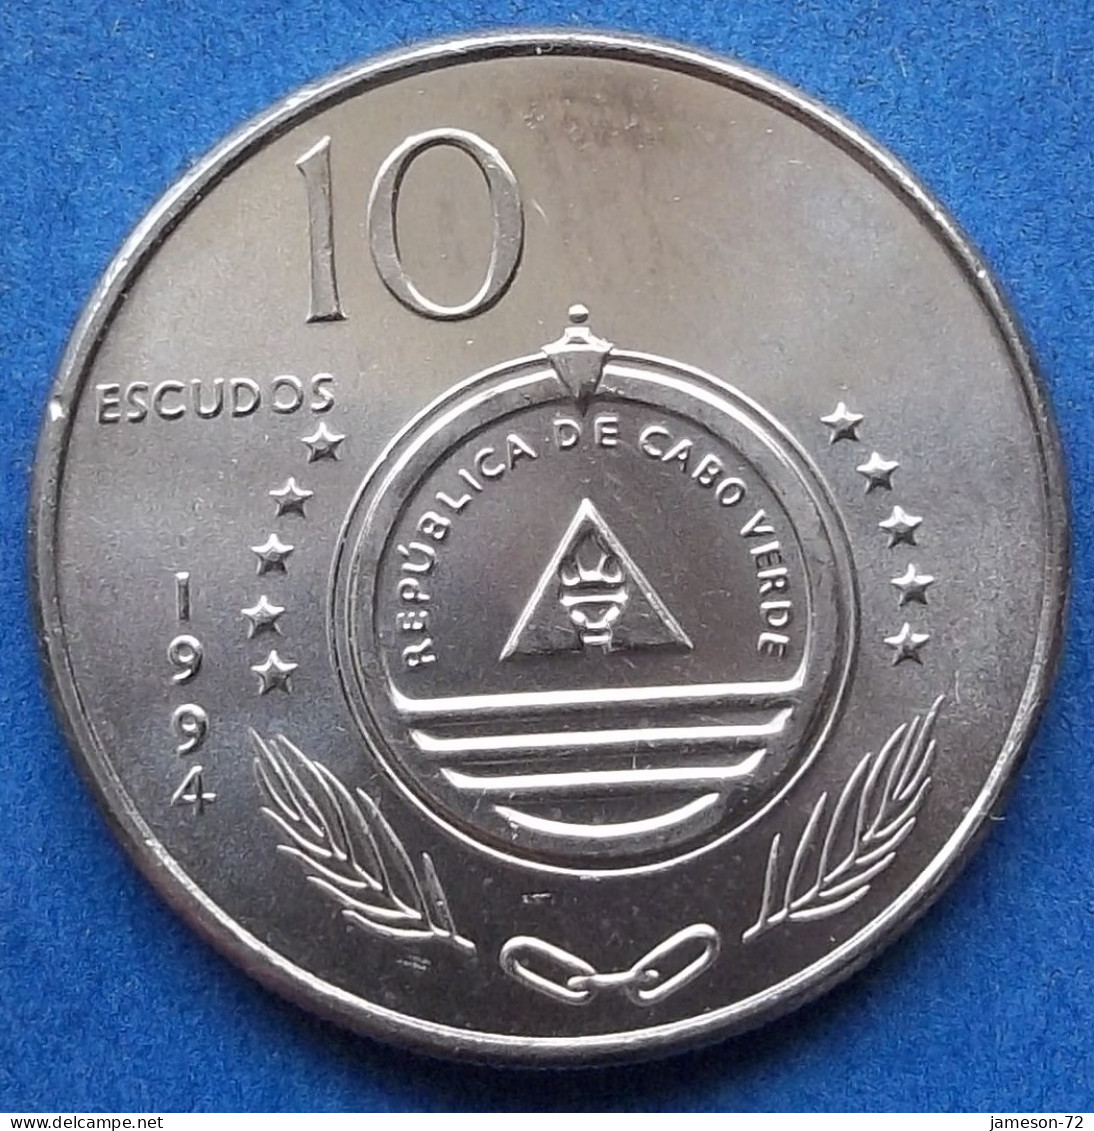 CAPE VERDE - 10 Escudos 1994 "Lingua De Vaca" KM# 32 Independent Republic (1975) - Edelweiss Coins - Cap Verde